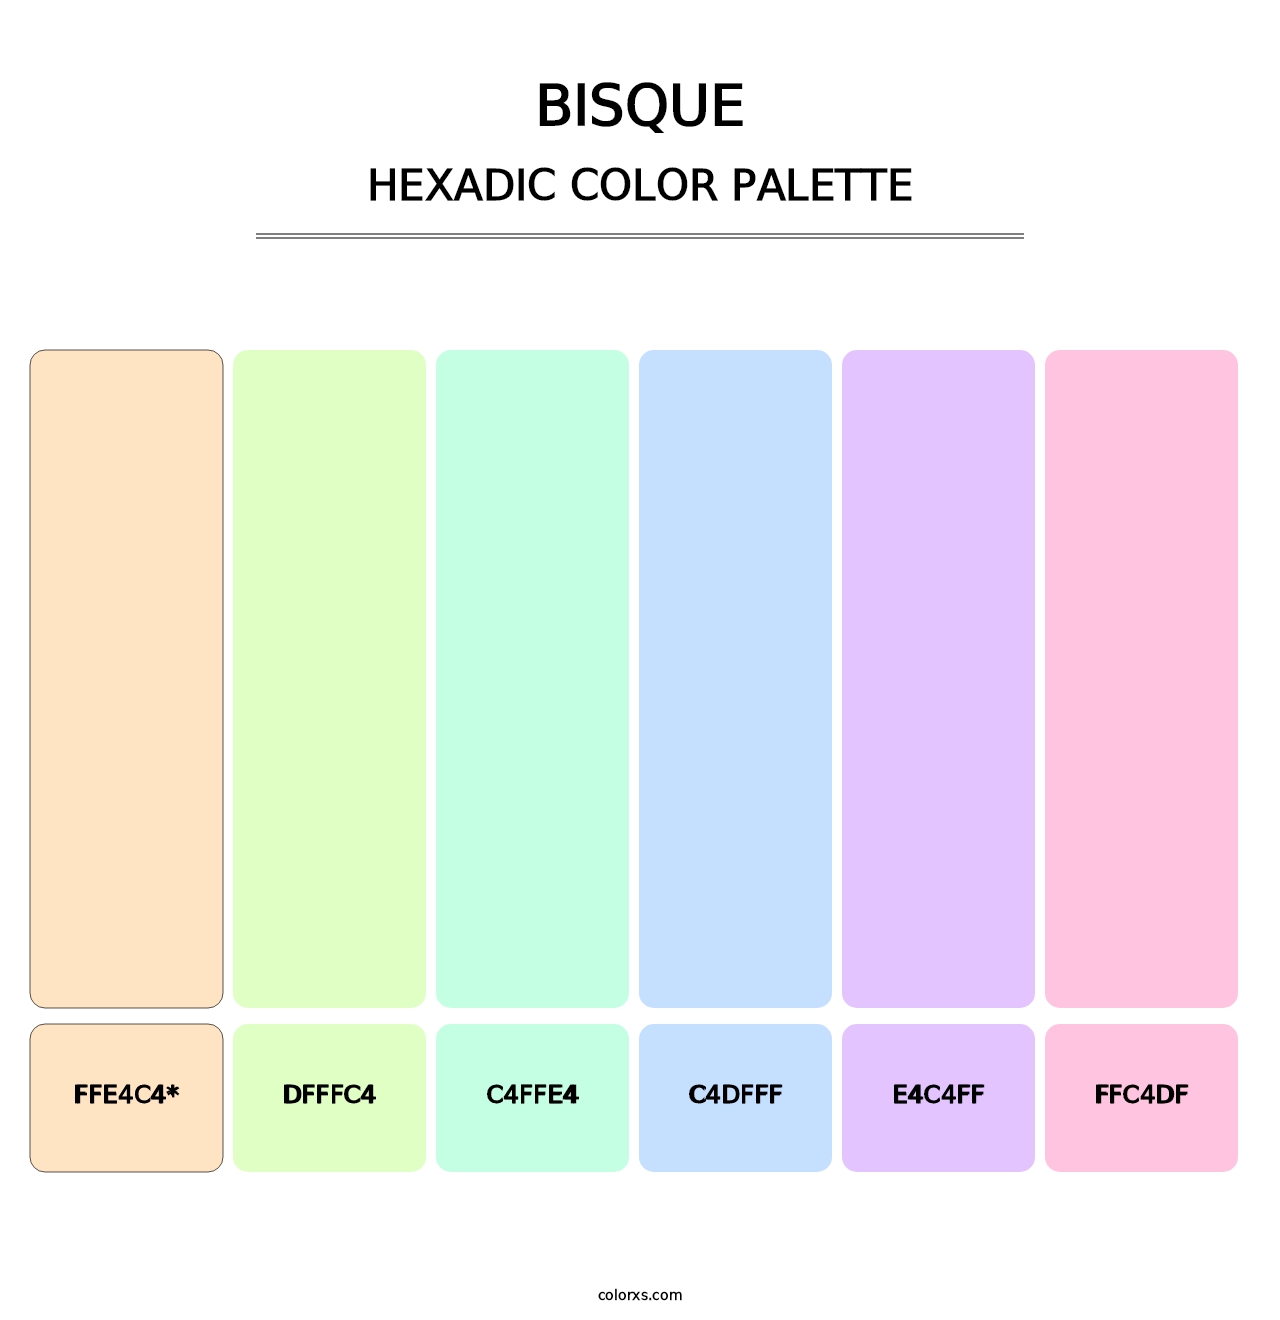 Bisque - Hexadic Color Palette